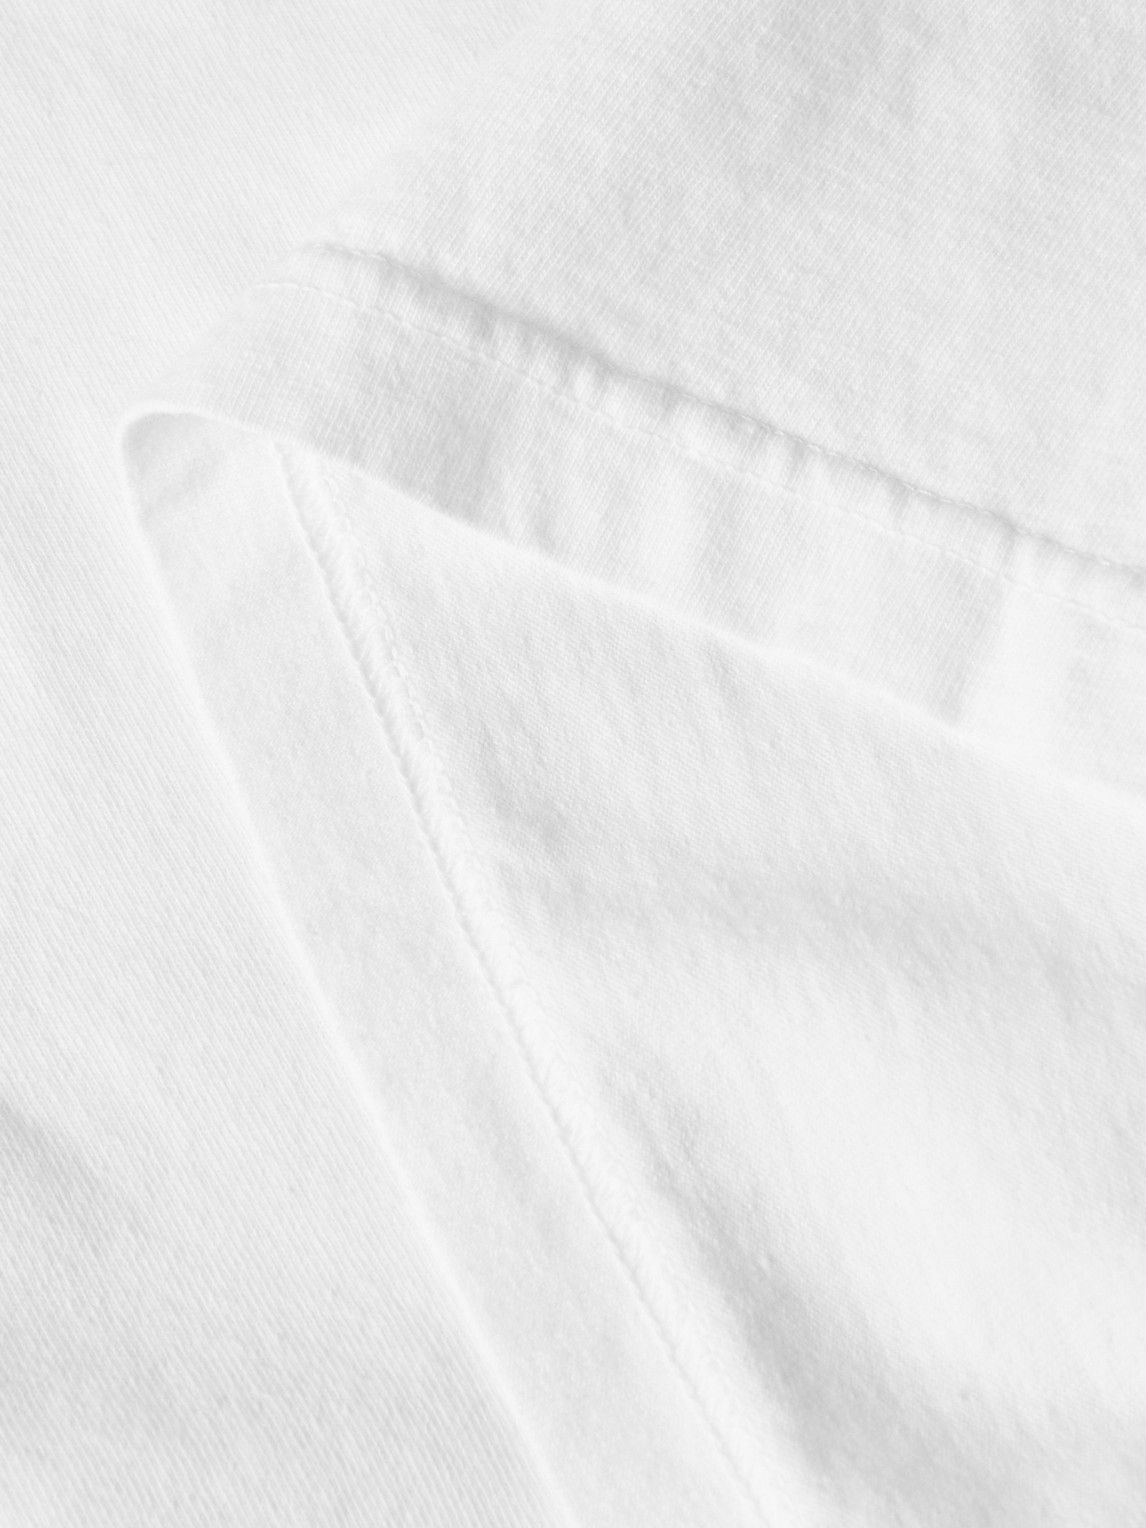 Stray Rats - Logo-Print Cotton-Jersey T-Shirt - White